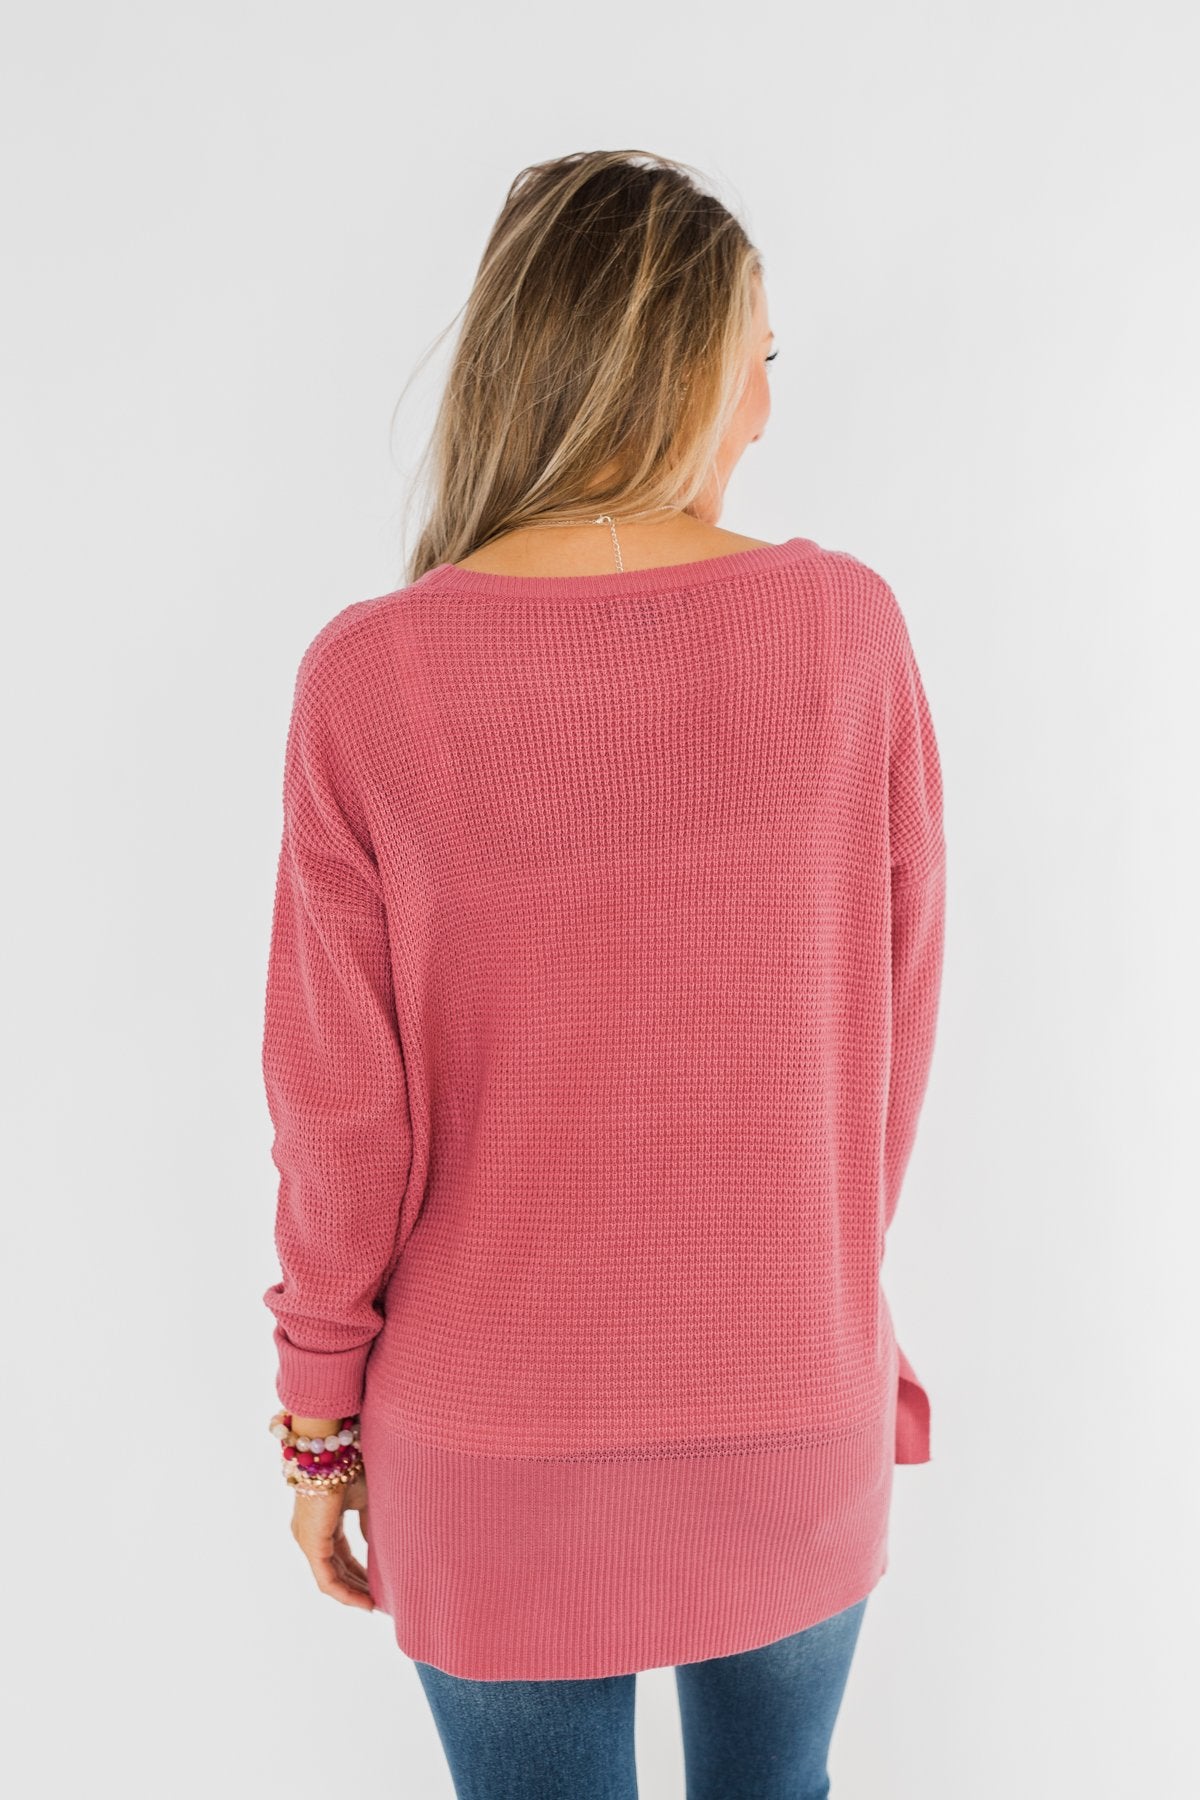 Dream About Us Knit Sweater- Lipstick Pink